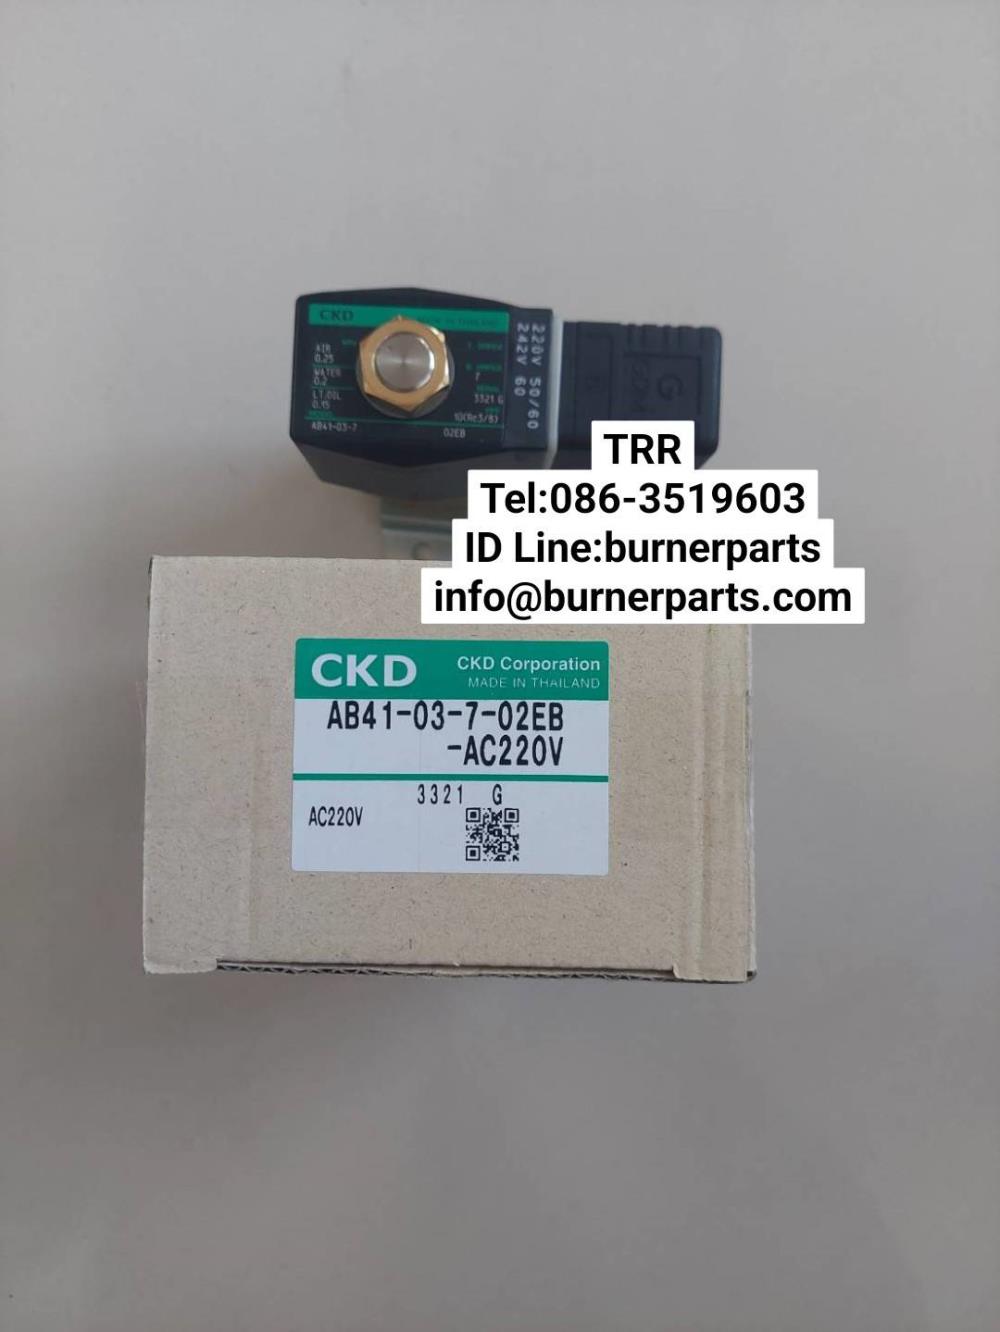 CKD AB41-03-7-02EB-AC220V.,CKD AB41-03-7-02EB-AC220V.,CKD AB41-03-7-02EB-AC220V.,Pumps, Valves and Accessories/Valves/Solenoid Valve